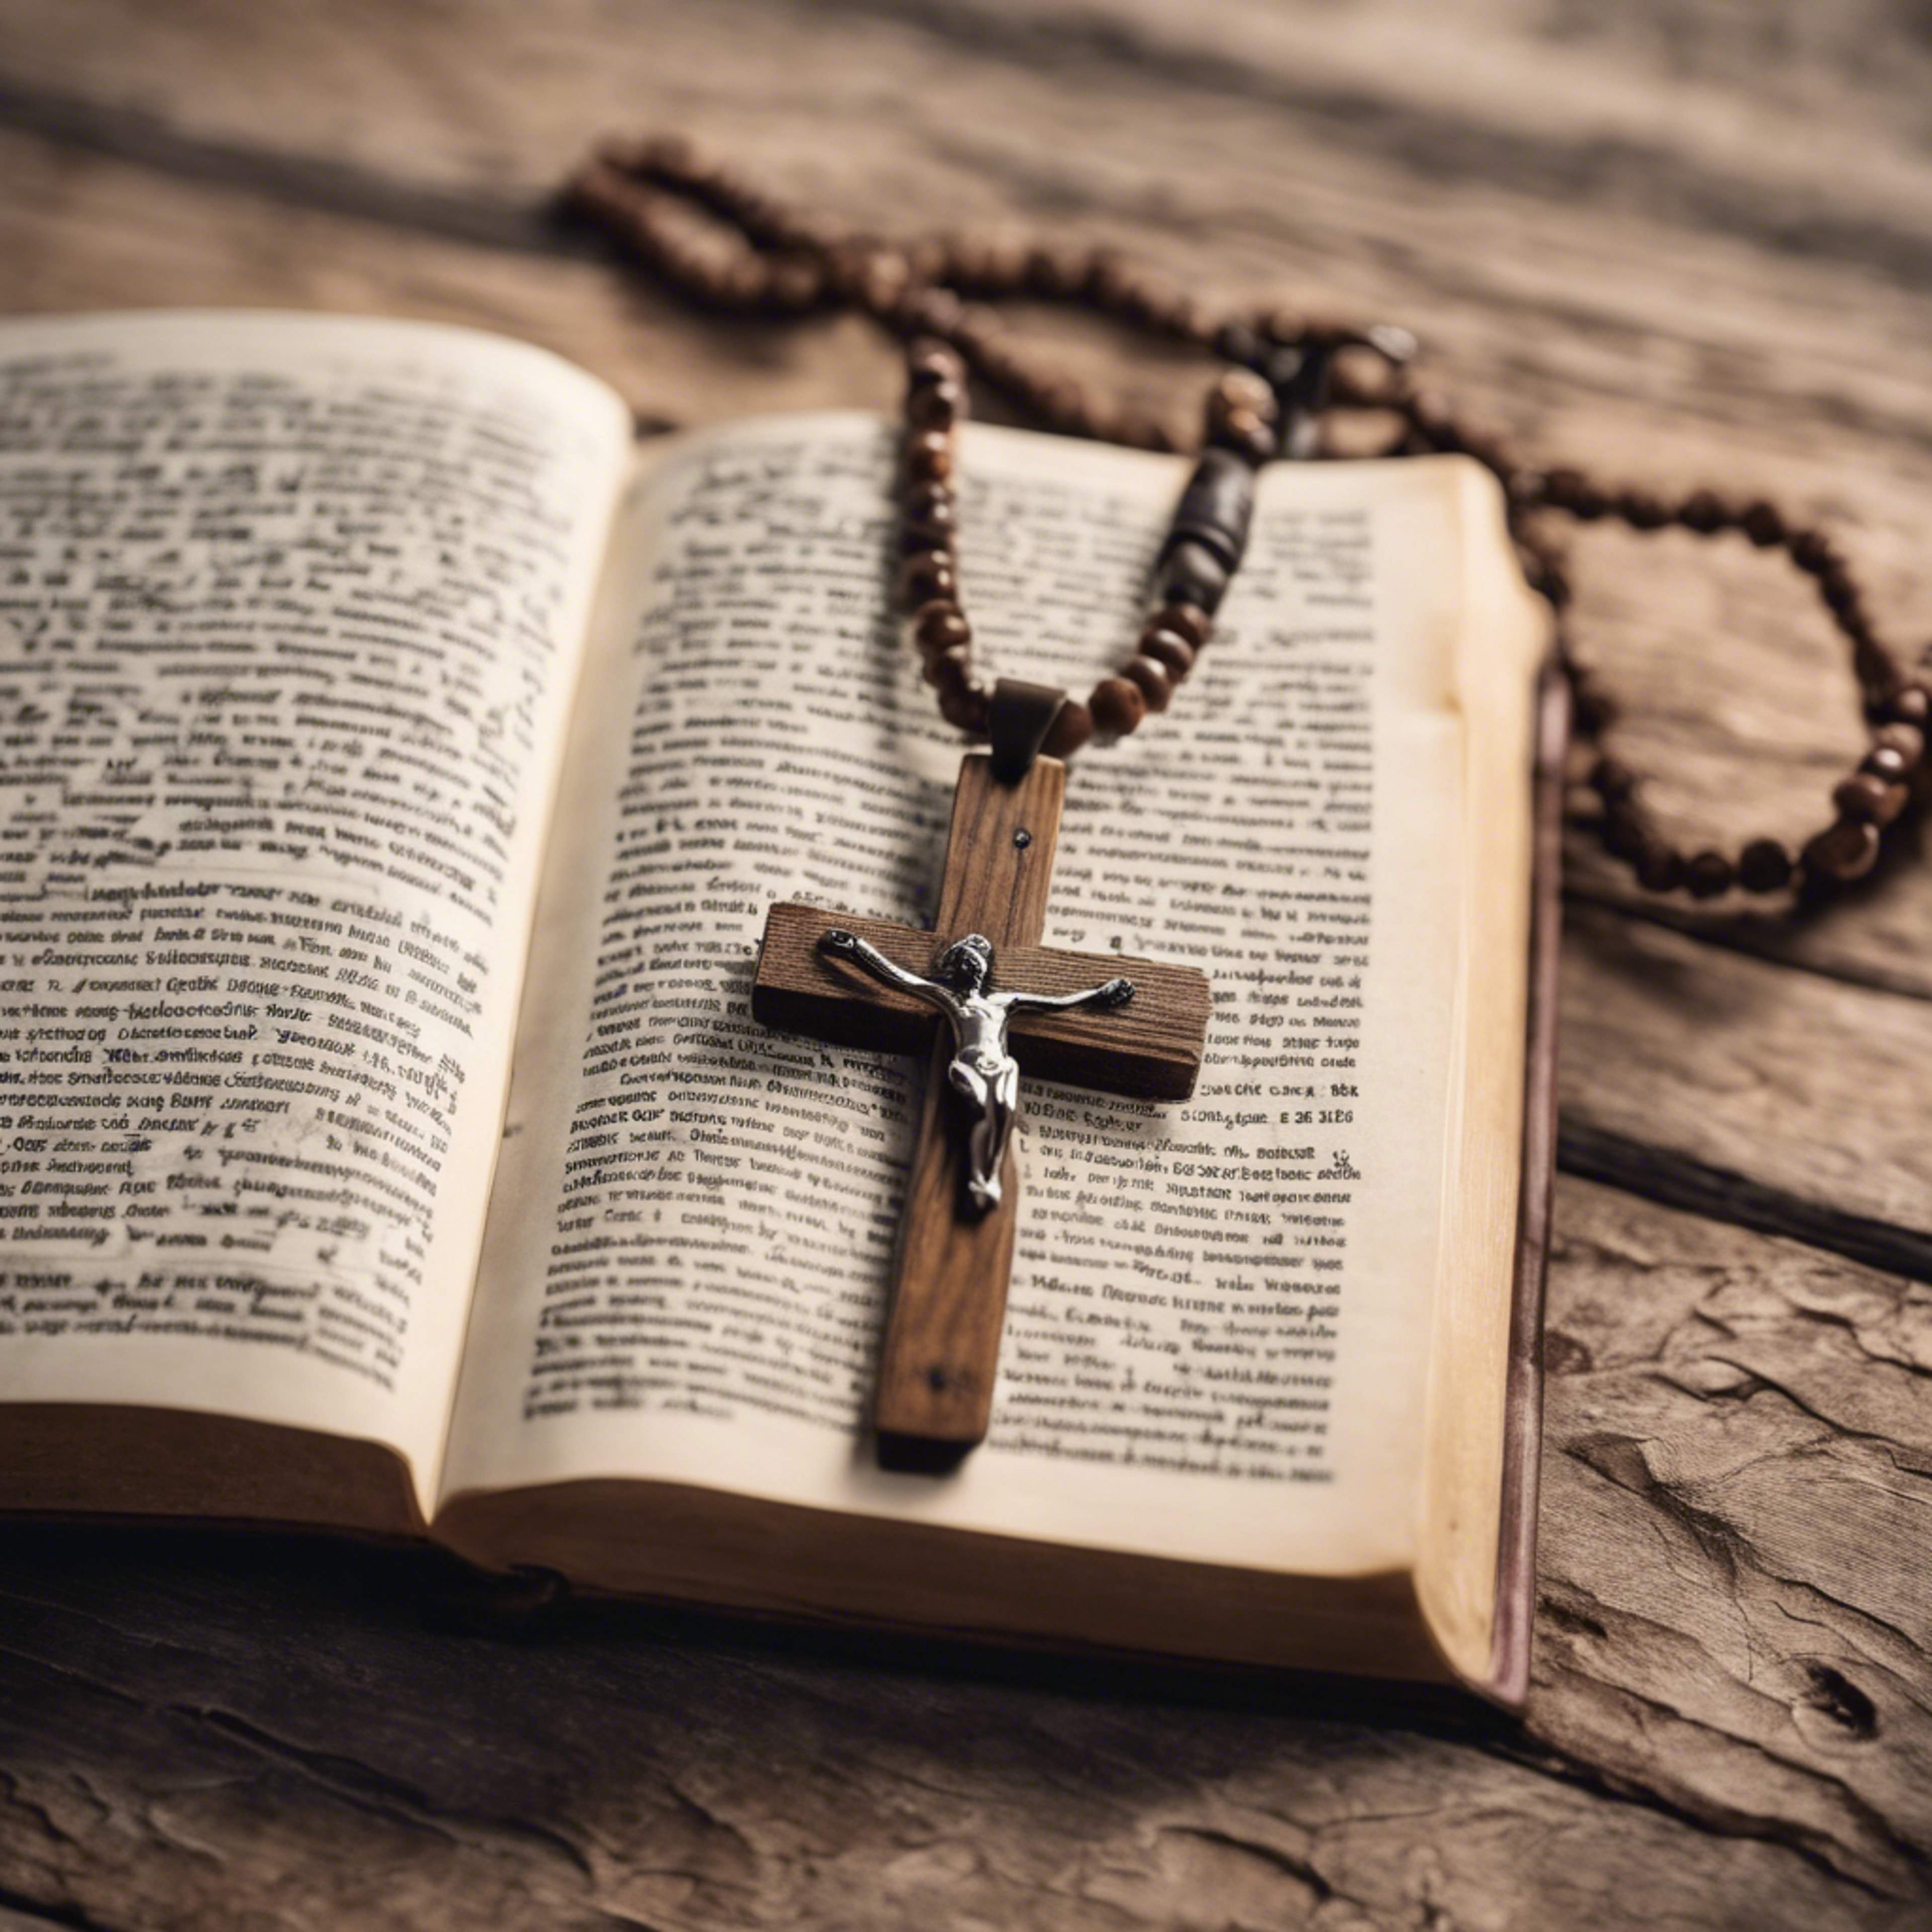 A rustic wooden cross pendant, resting on an open Bible with highlighted verses. Hình nền[546e5e84b1254317a8cf]